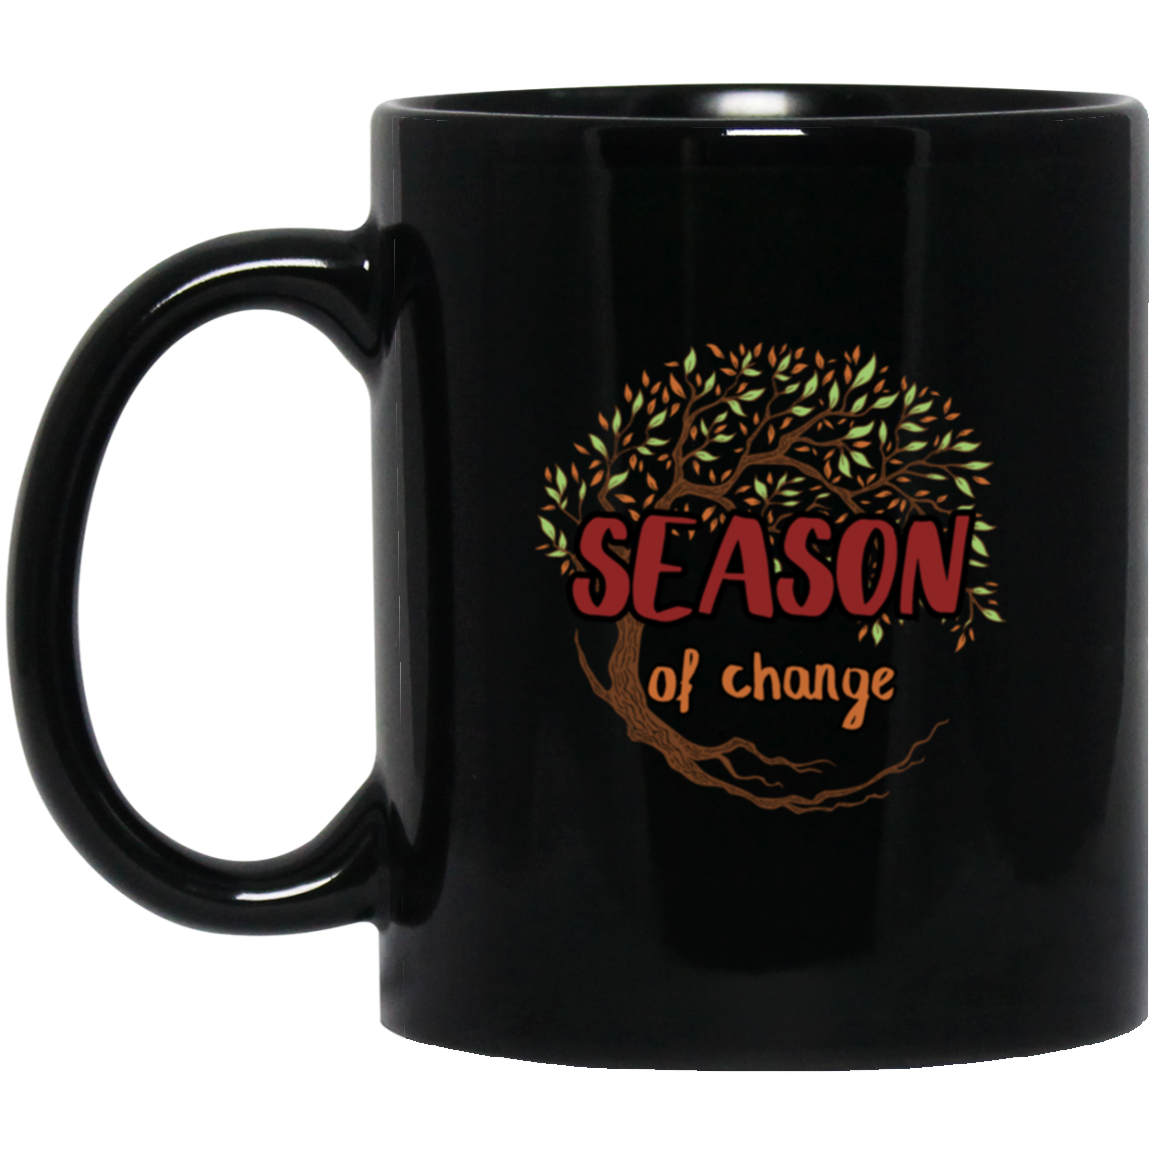 Season of Change - 11 & 15 oz. Black Mug